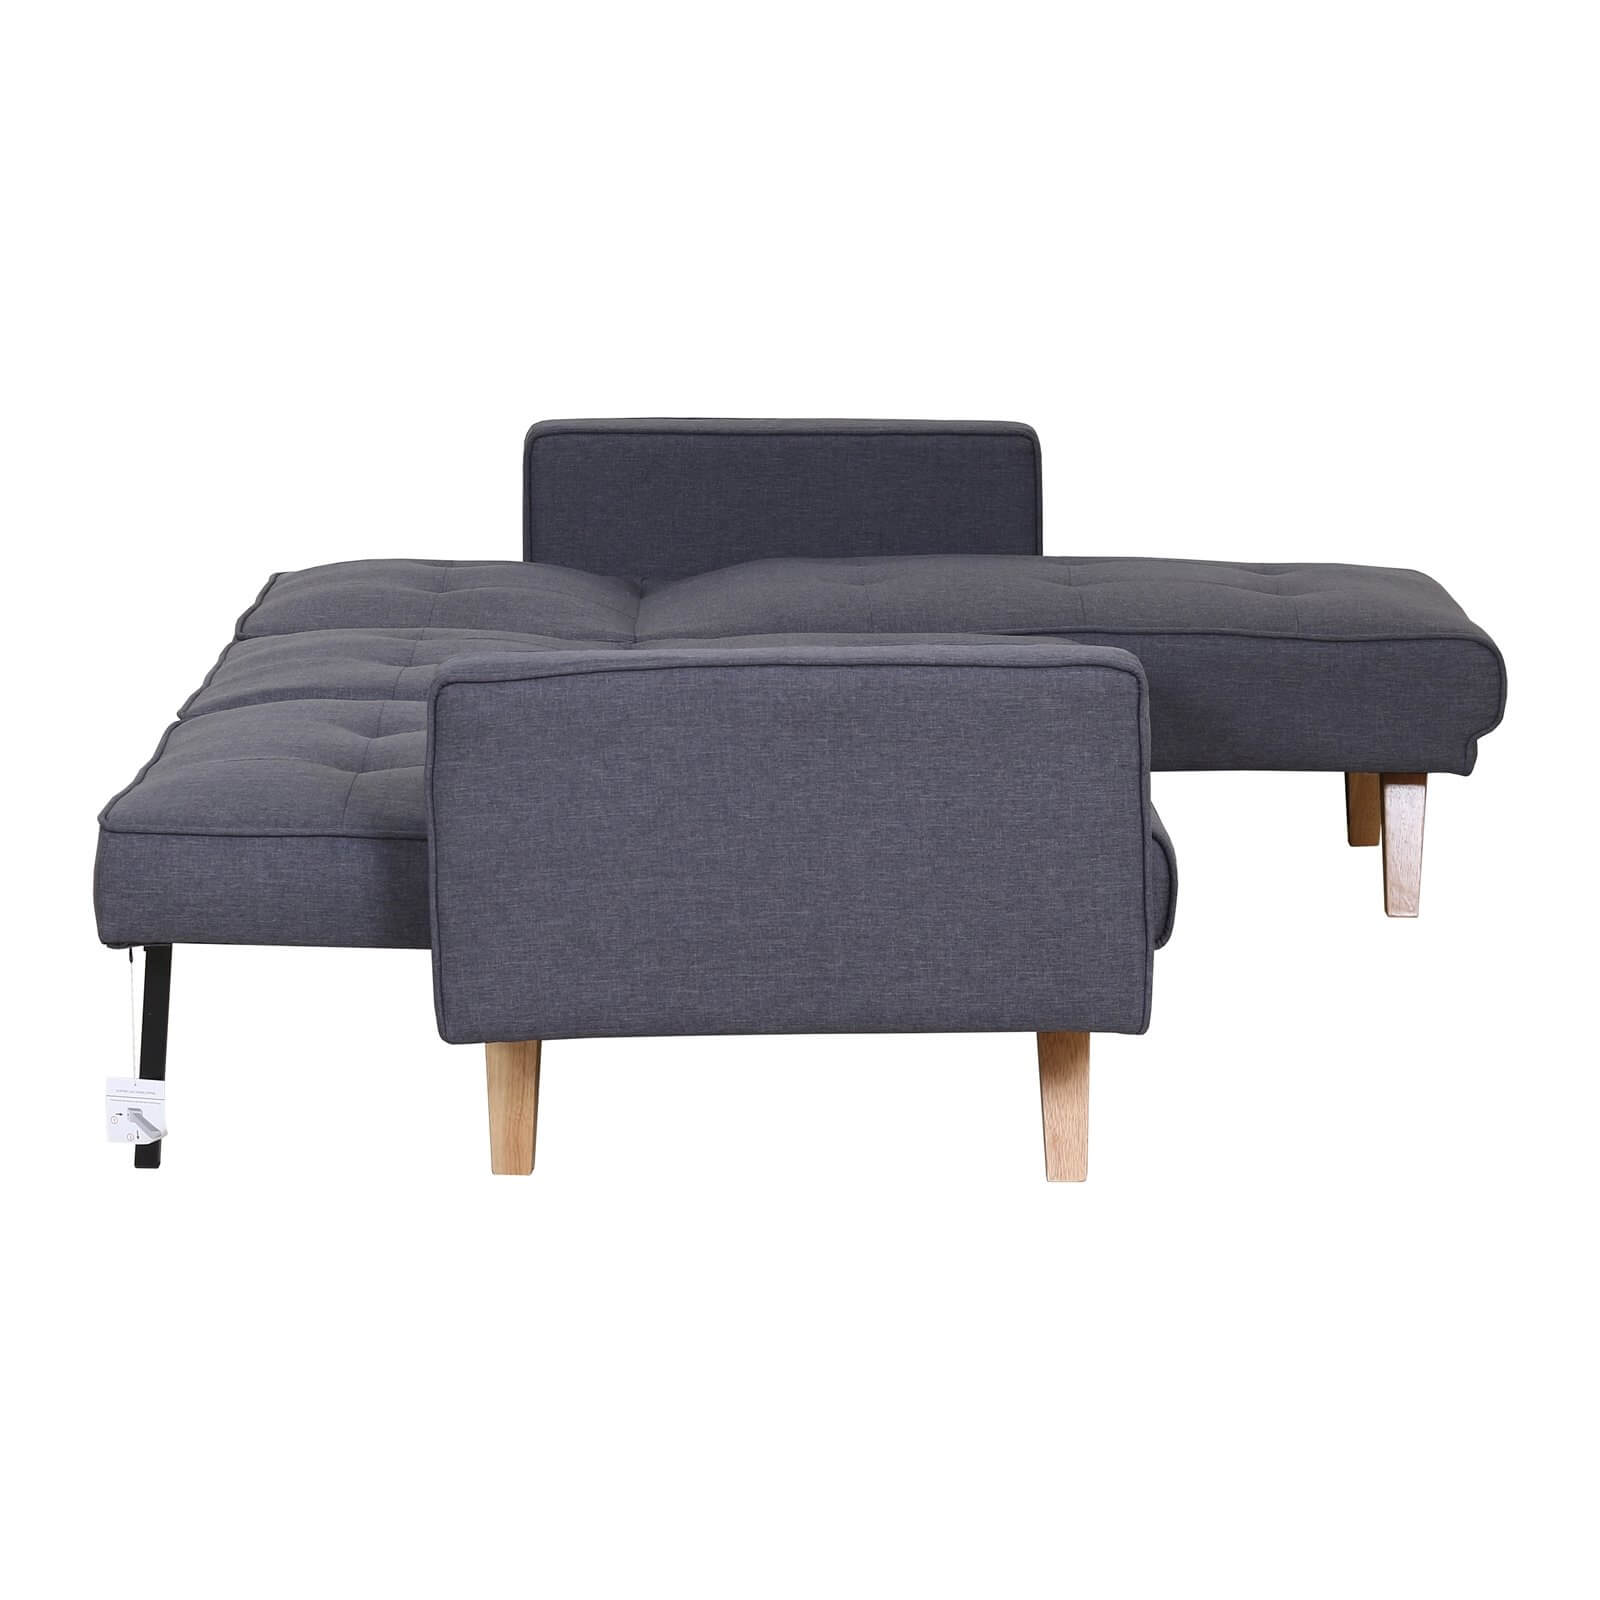 Kitson Sofa Bed - Grey